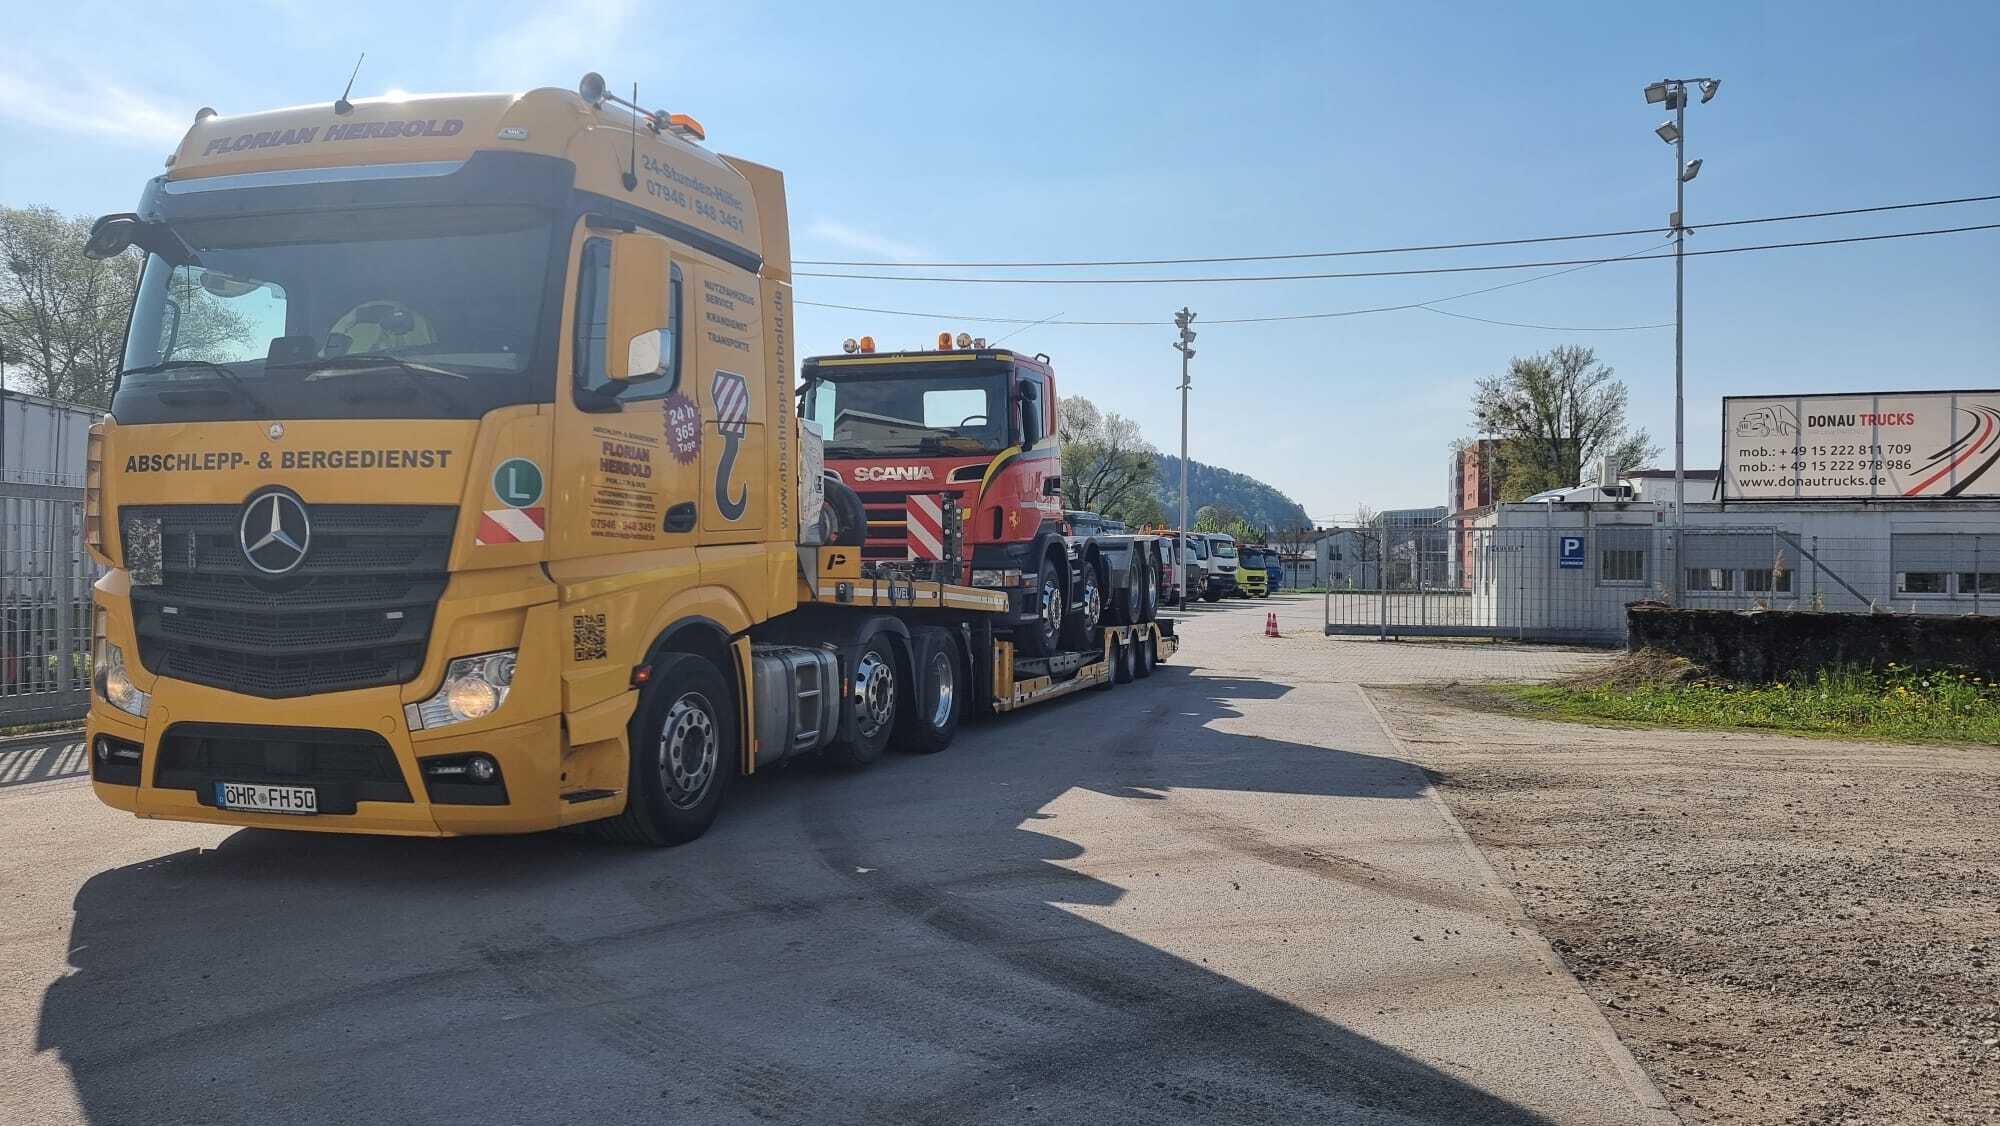 Donau Trucks GmbH undefined: photos 4